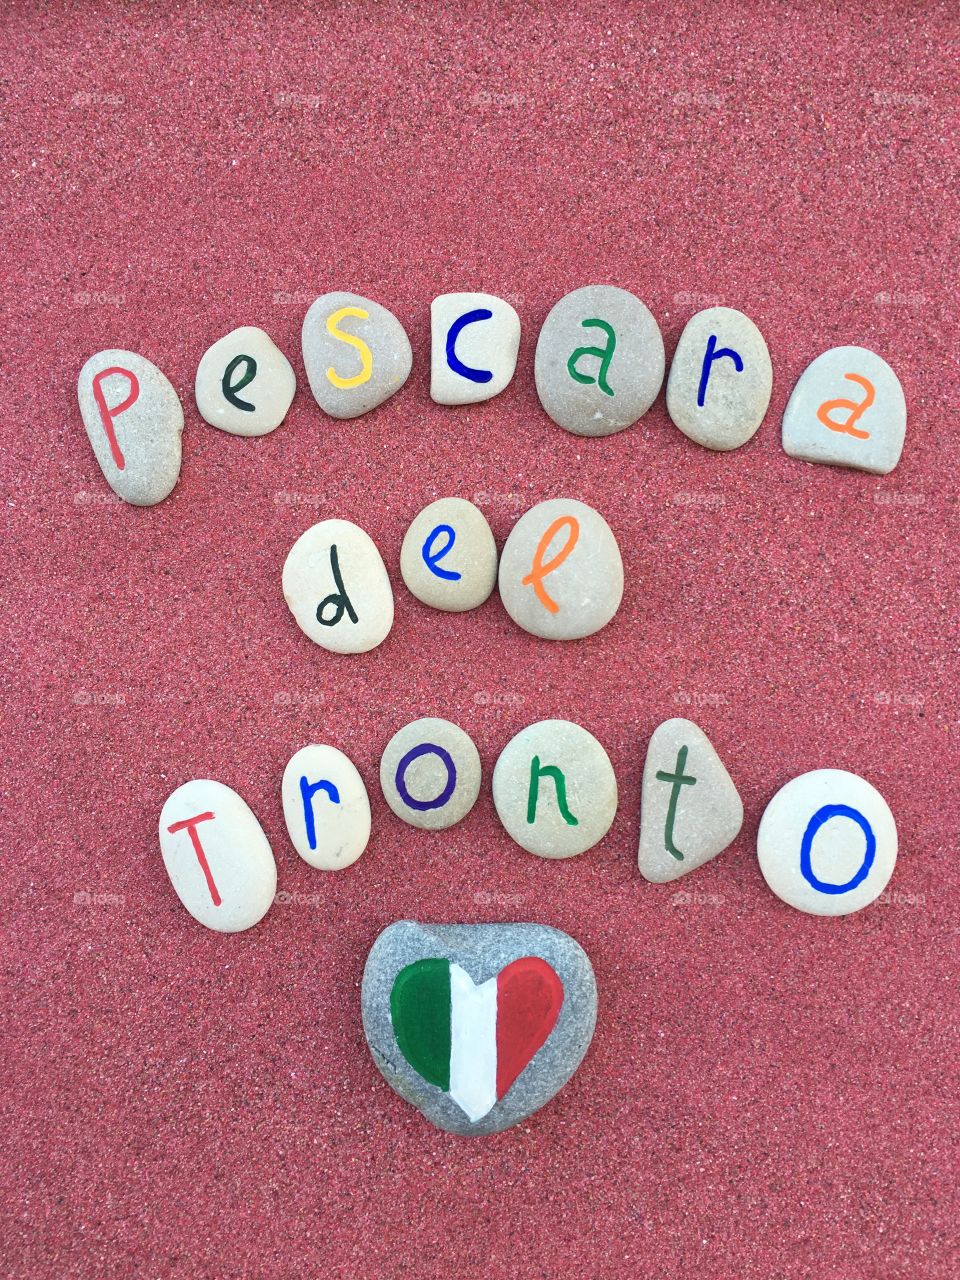 Pescara del Tronto, memorial stones composition on red sand 